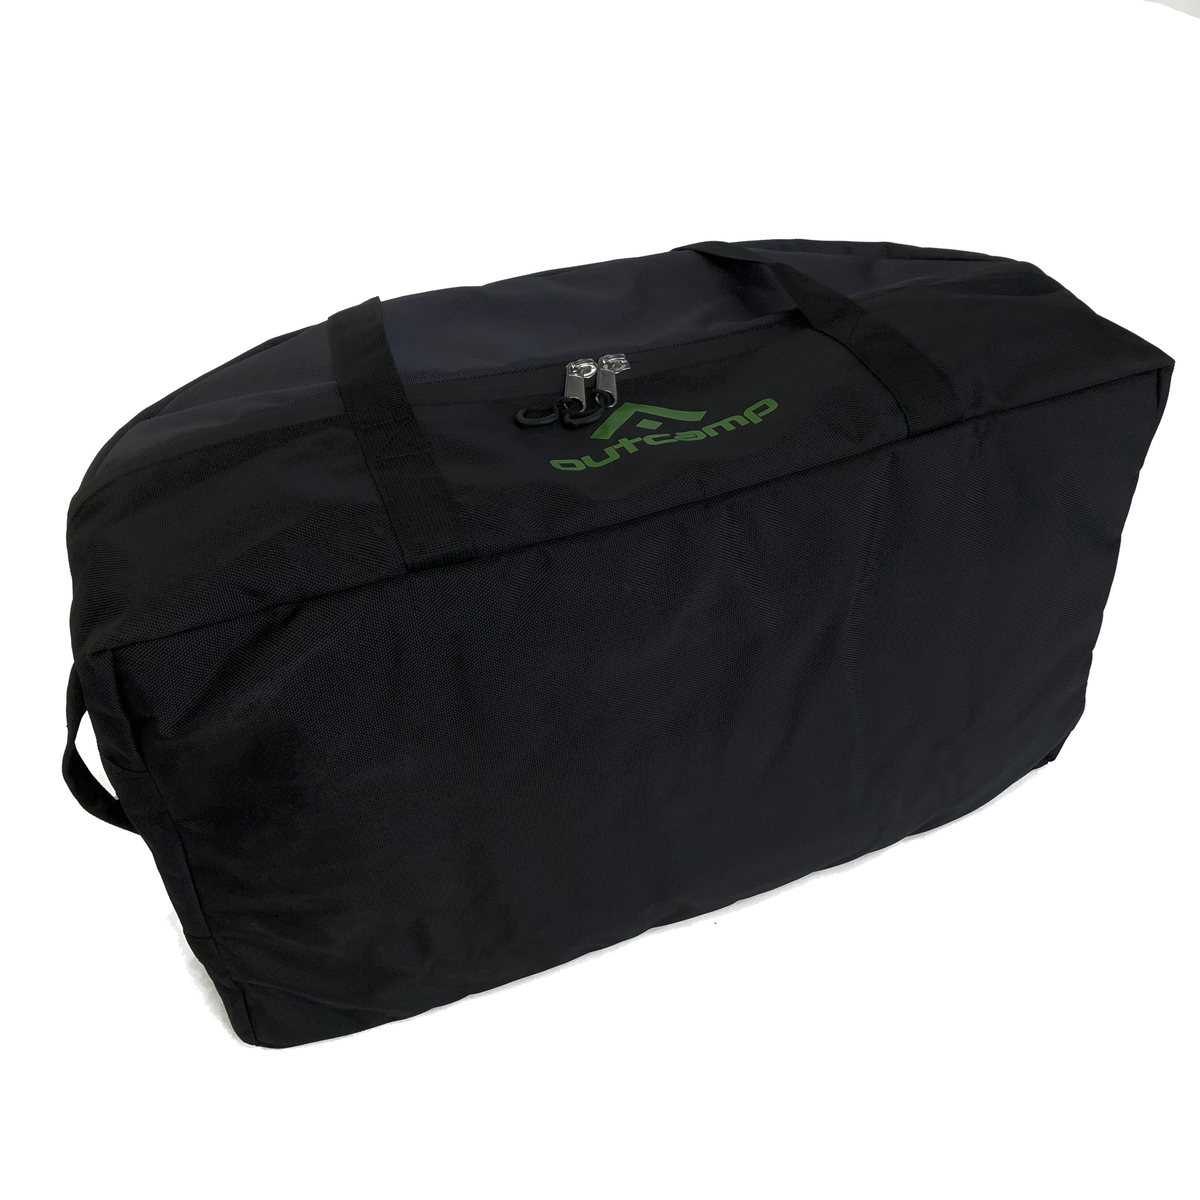 Weber Q2000 BBQ carry bag made by Outcamp